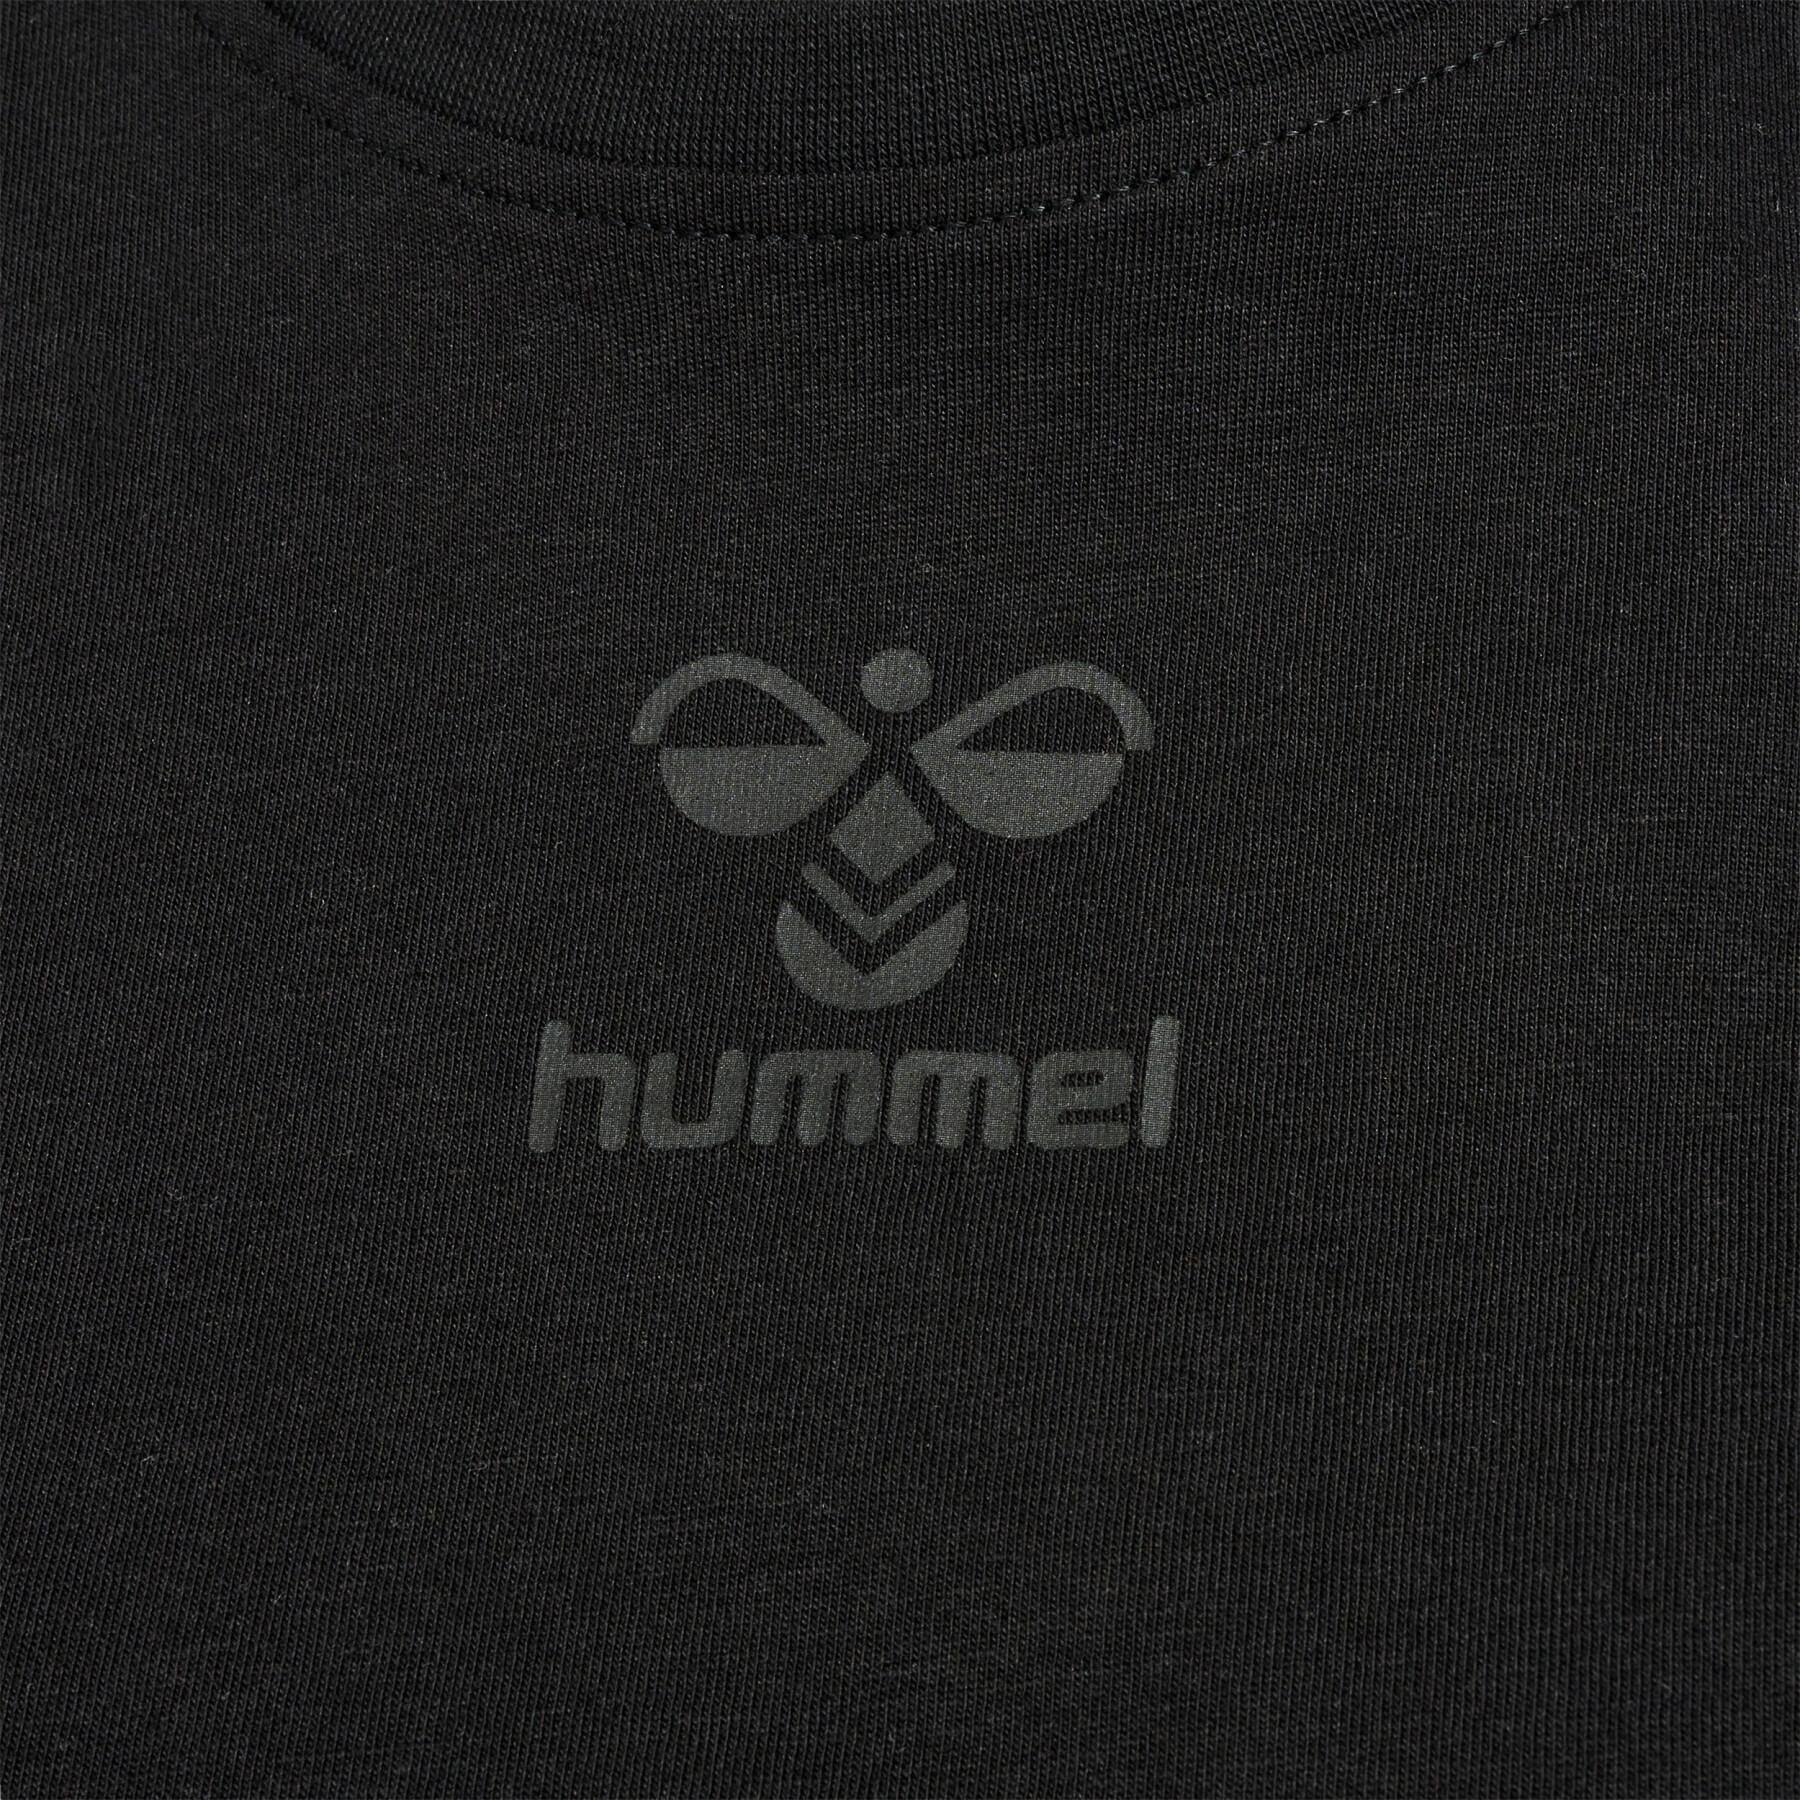 - Hummel Icons Brands T-shirt - Lifestyle Hummel Women\'s -